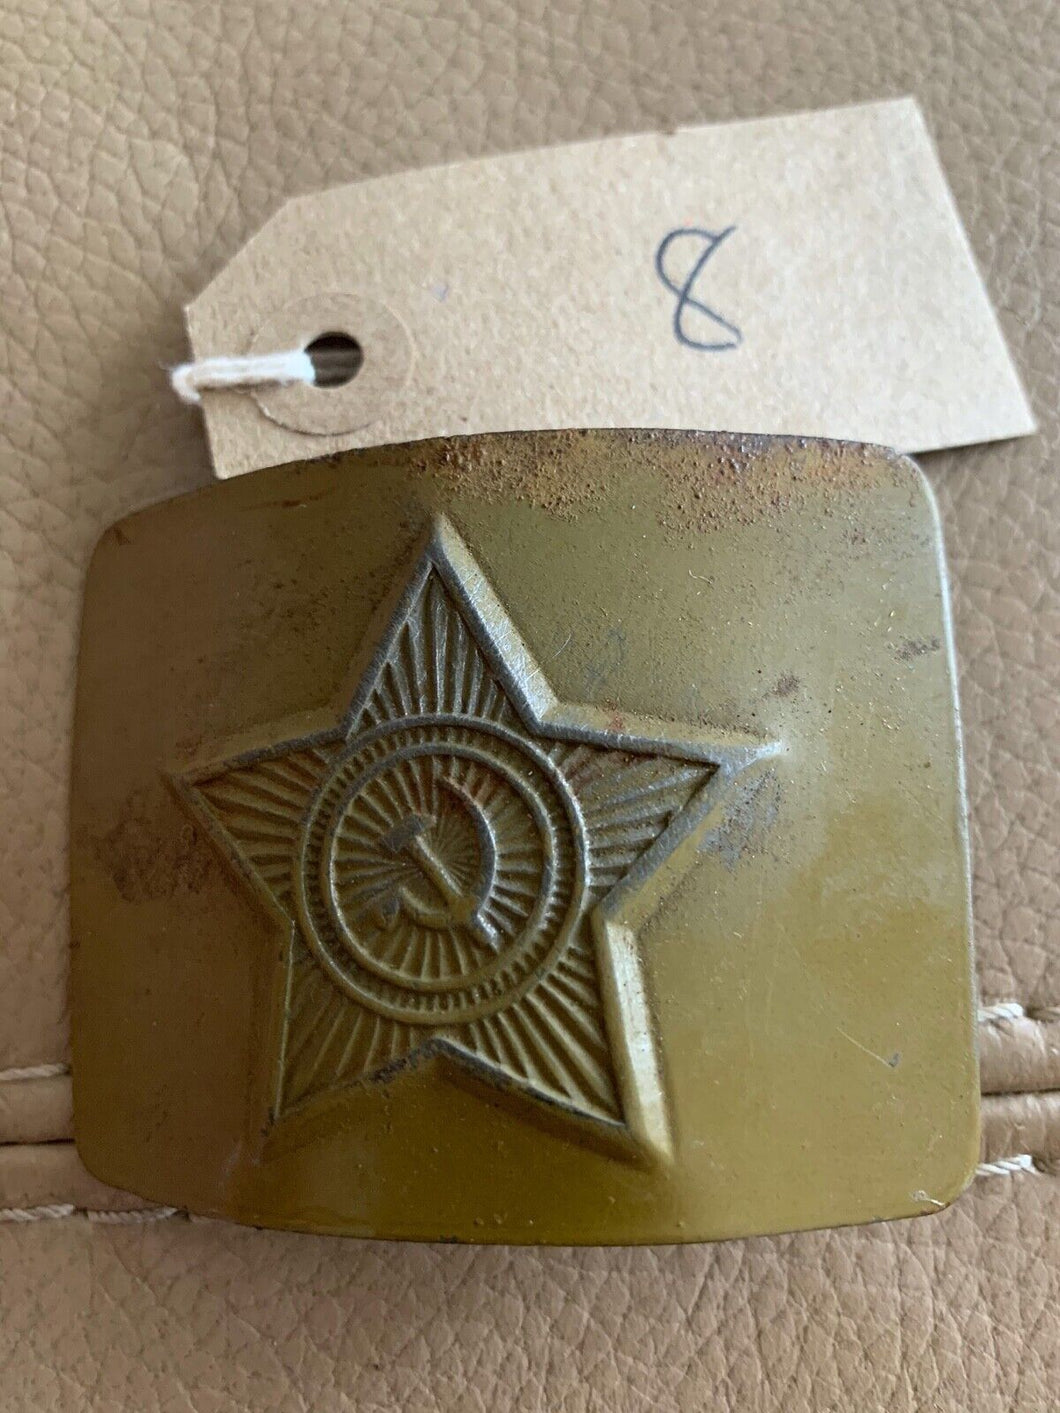 Genuine WW2 USSR Russian Soldiers Army Belt Buckle - Steel Painted Green - #8